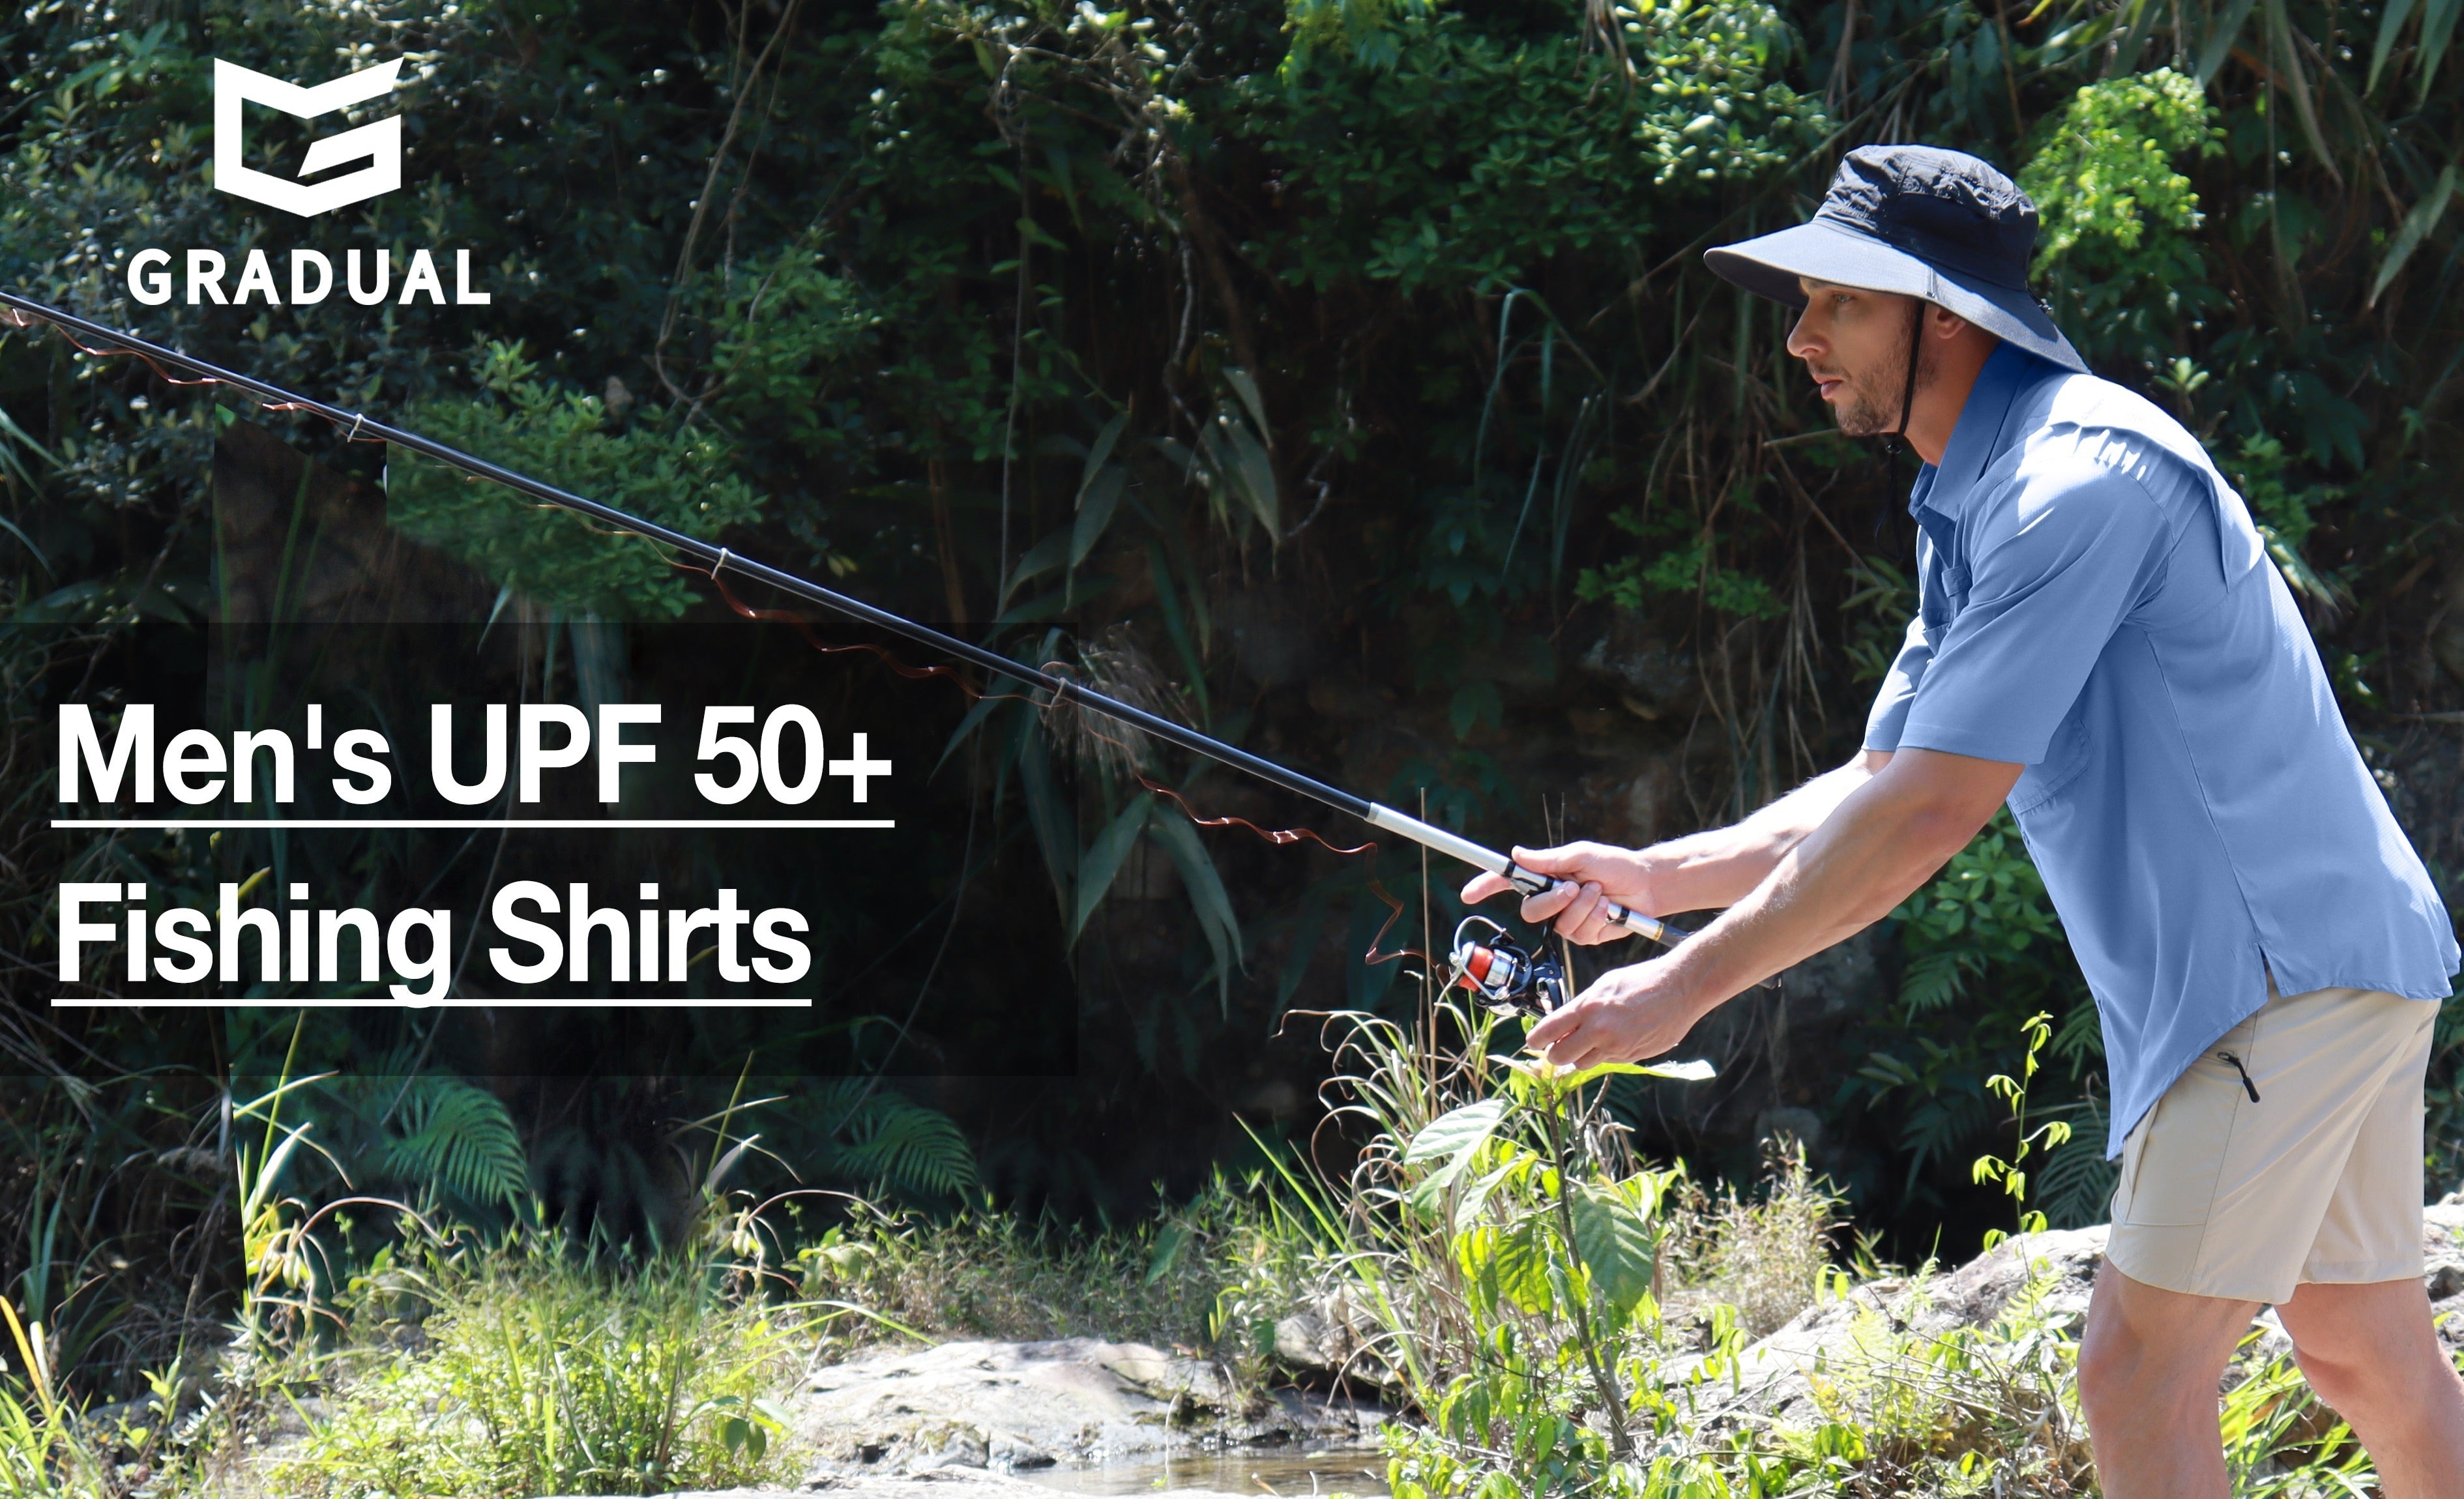 Gradual fishing brand advertisement. Man fishing in blue shirt and khaki shorts. 